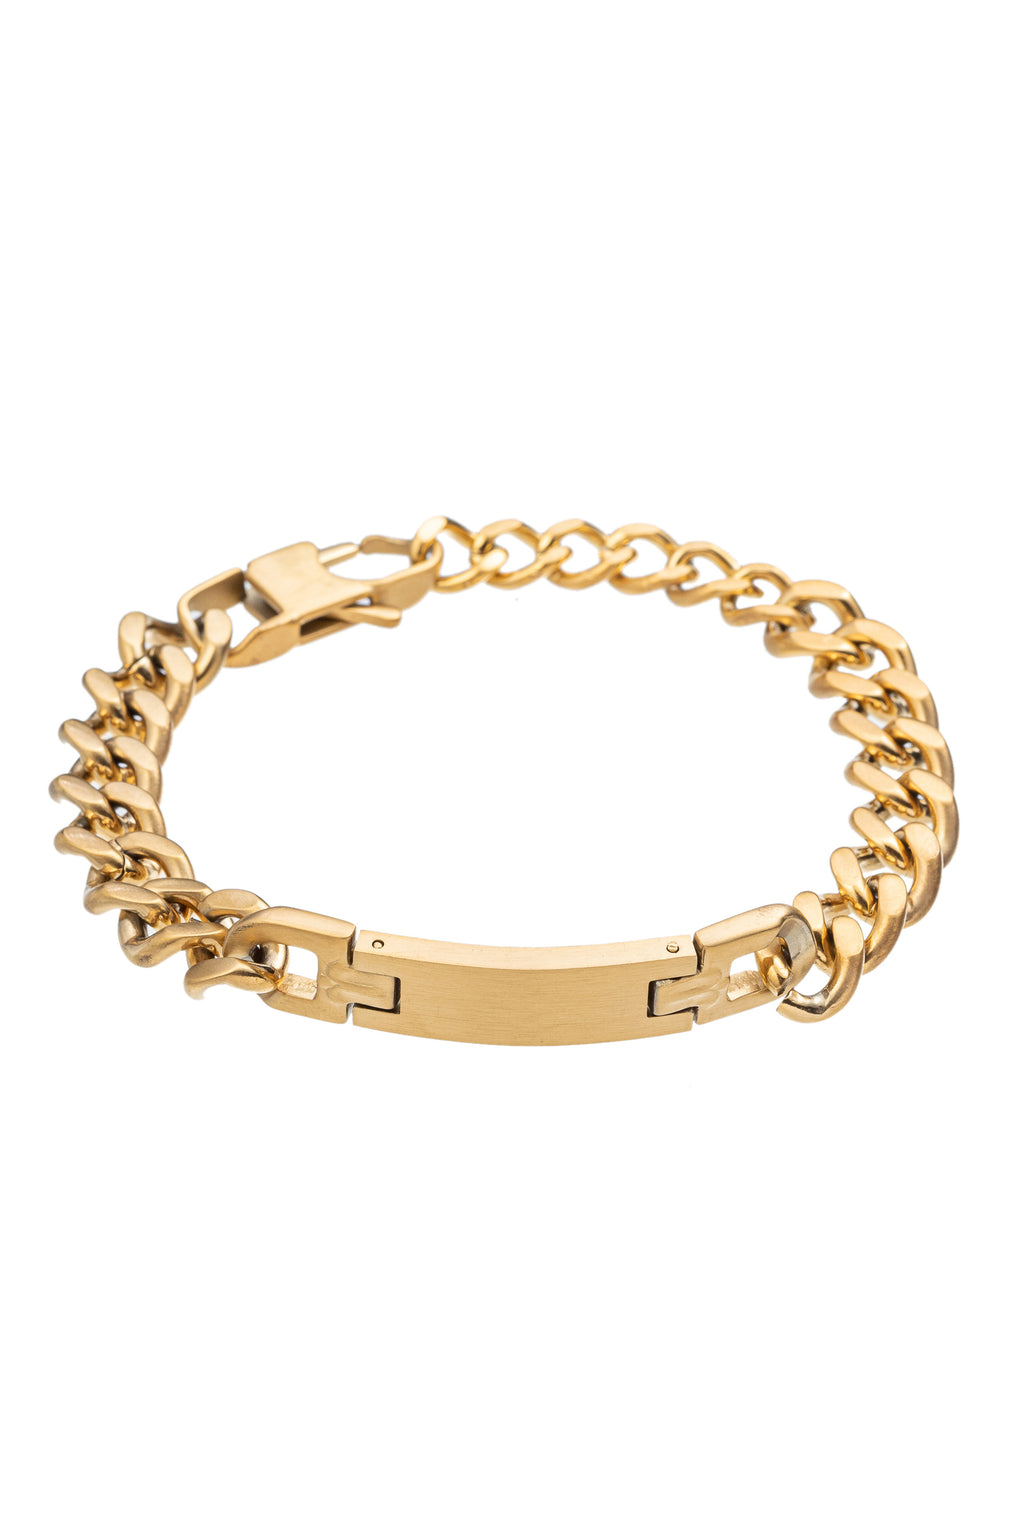 Gold tone brass name tag chain bracelet.